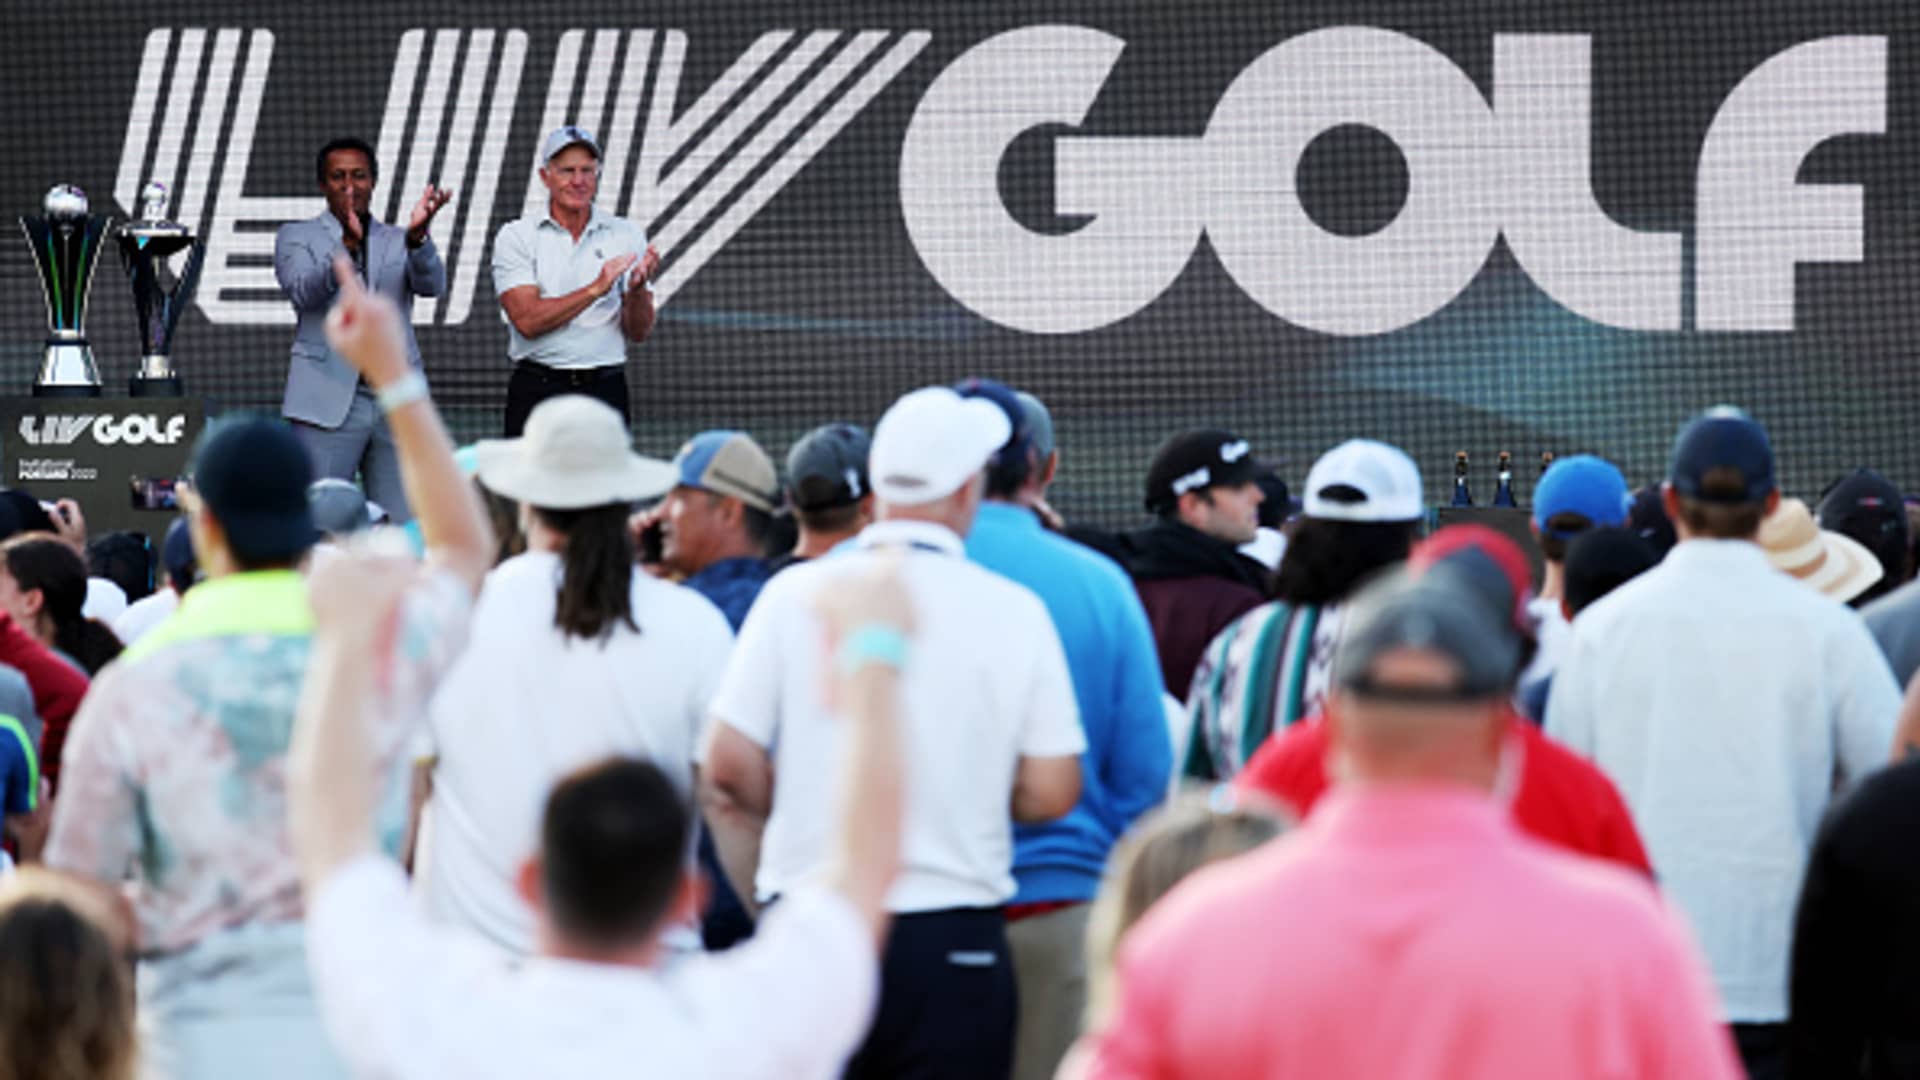 Inside the PGA Tour’s Washington lobbying effort against the Saudi-funded LIV golf league